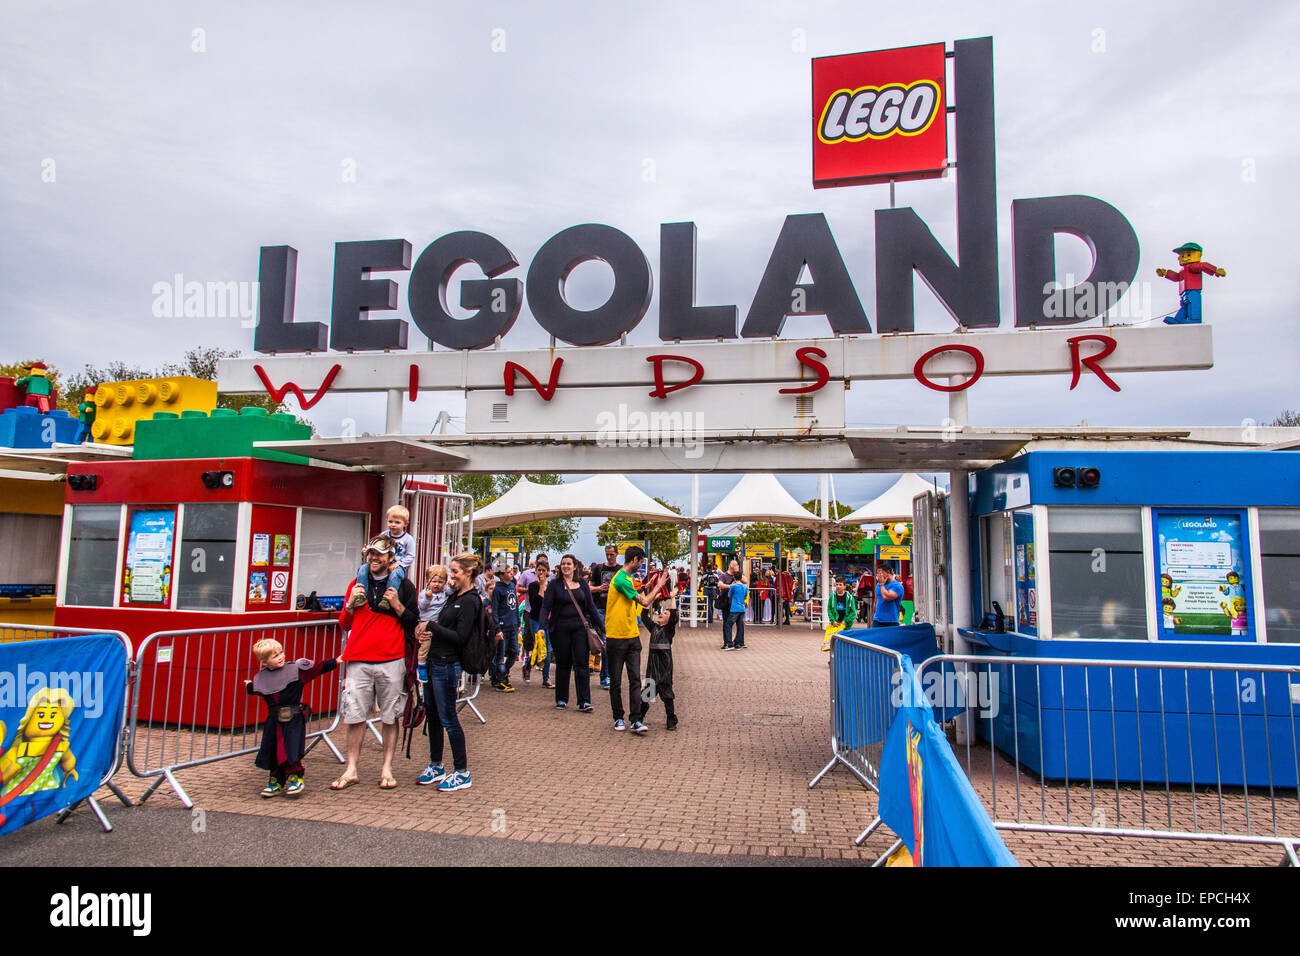 Legoland england hi-res stock photography and images - Alamy